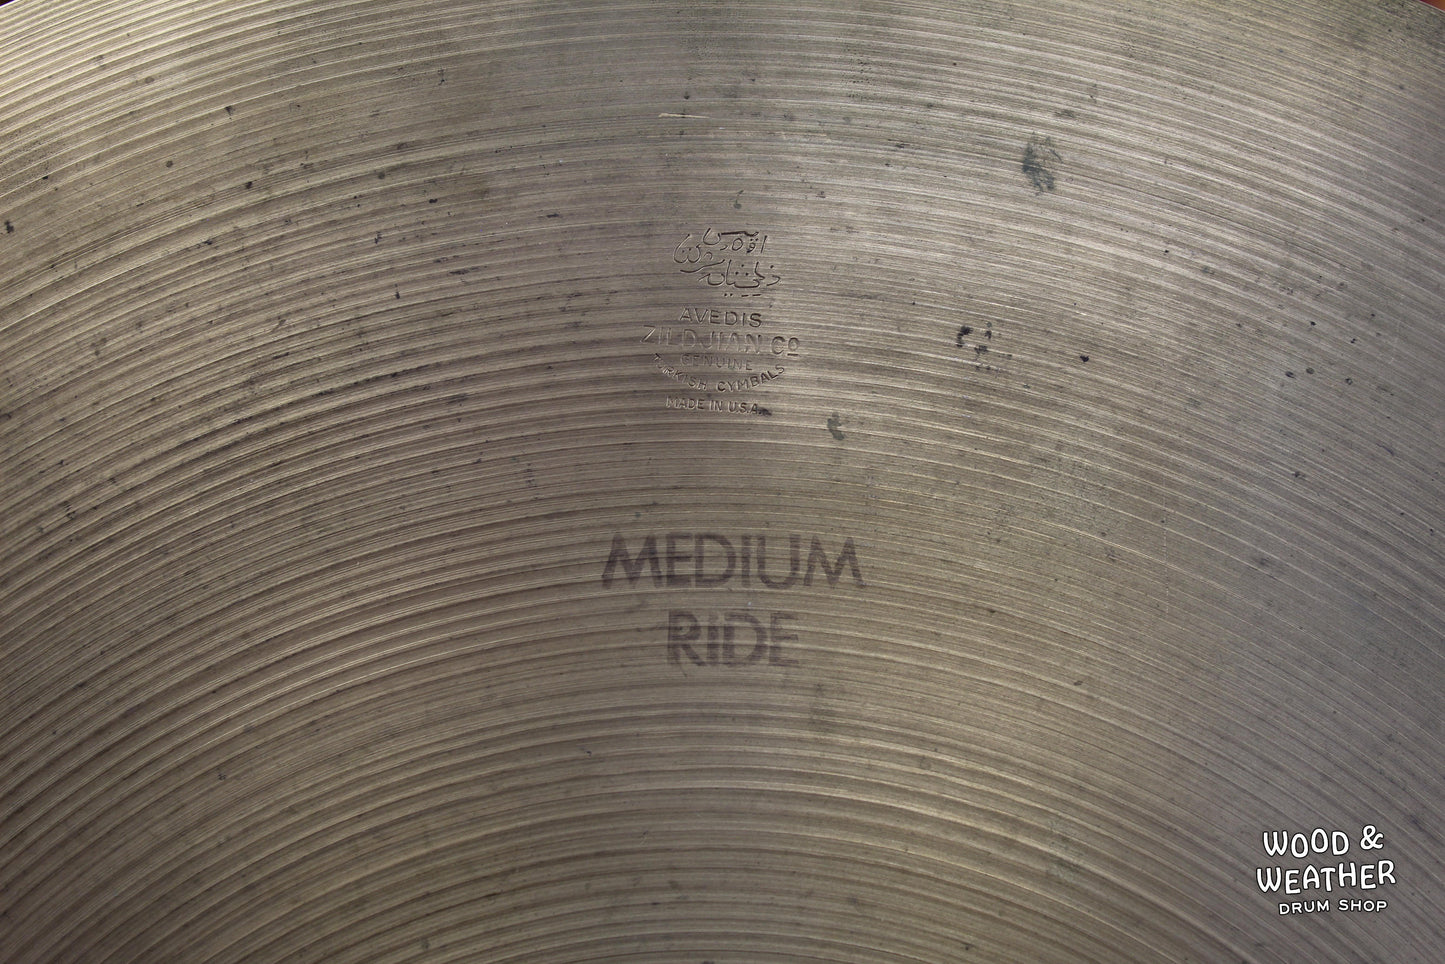 1960s A. Zildjian 24" Medium Ride Cymbal 4050g